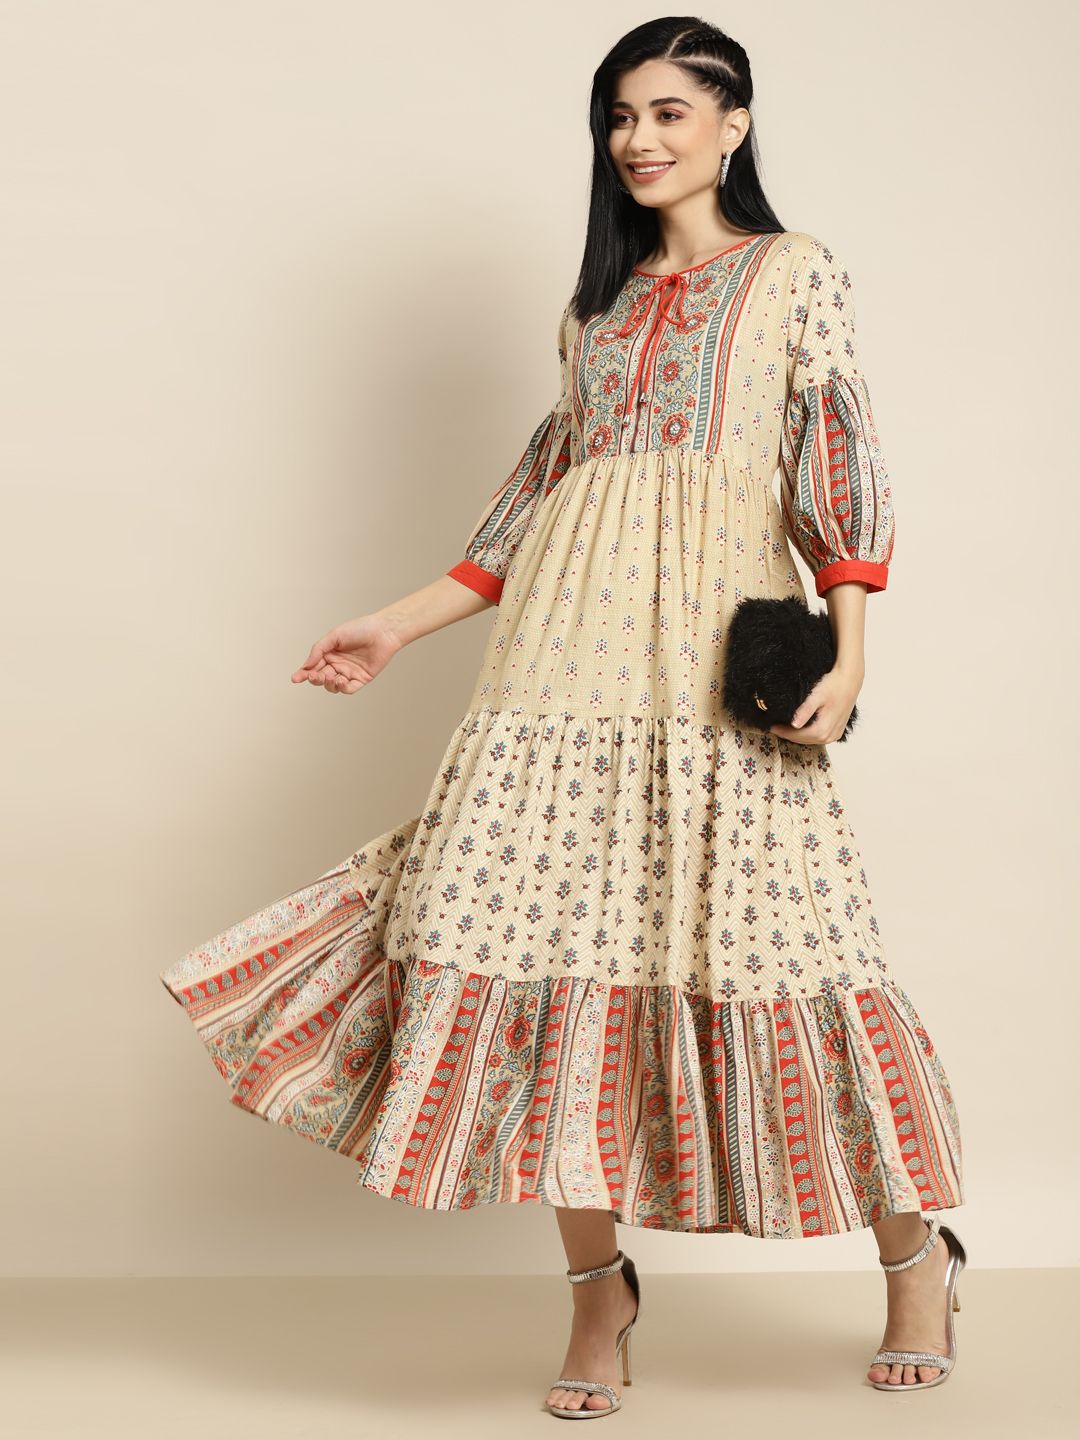 Juniper Beige Printed Tiered Ethnic Dress Price in India